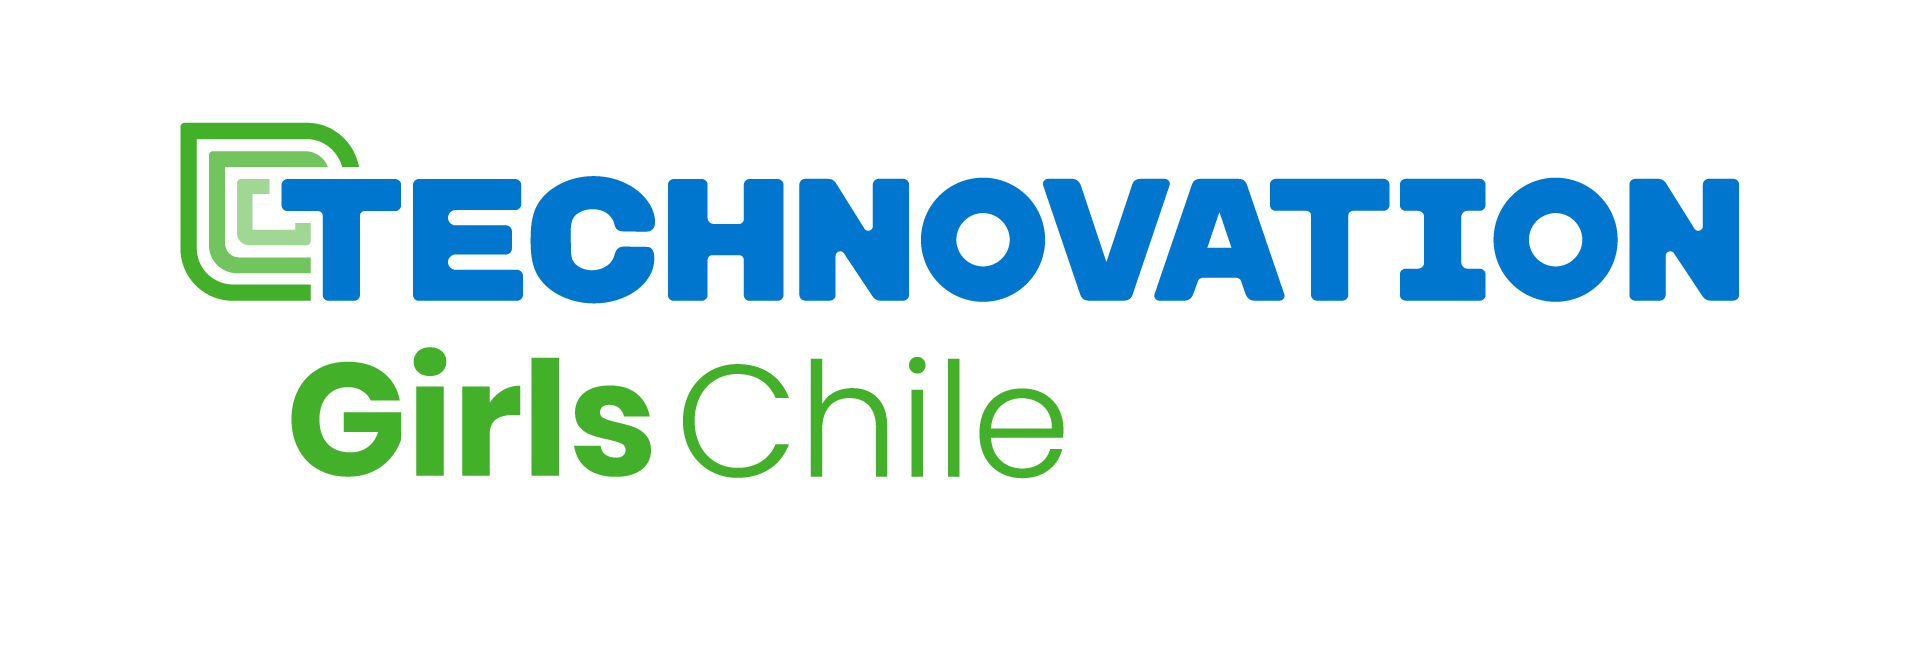 Technovation Girls Chile